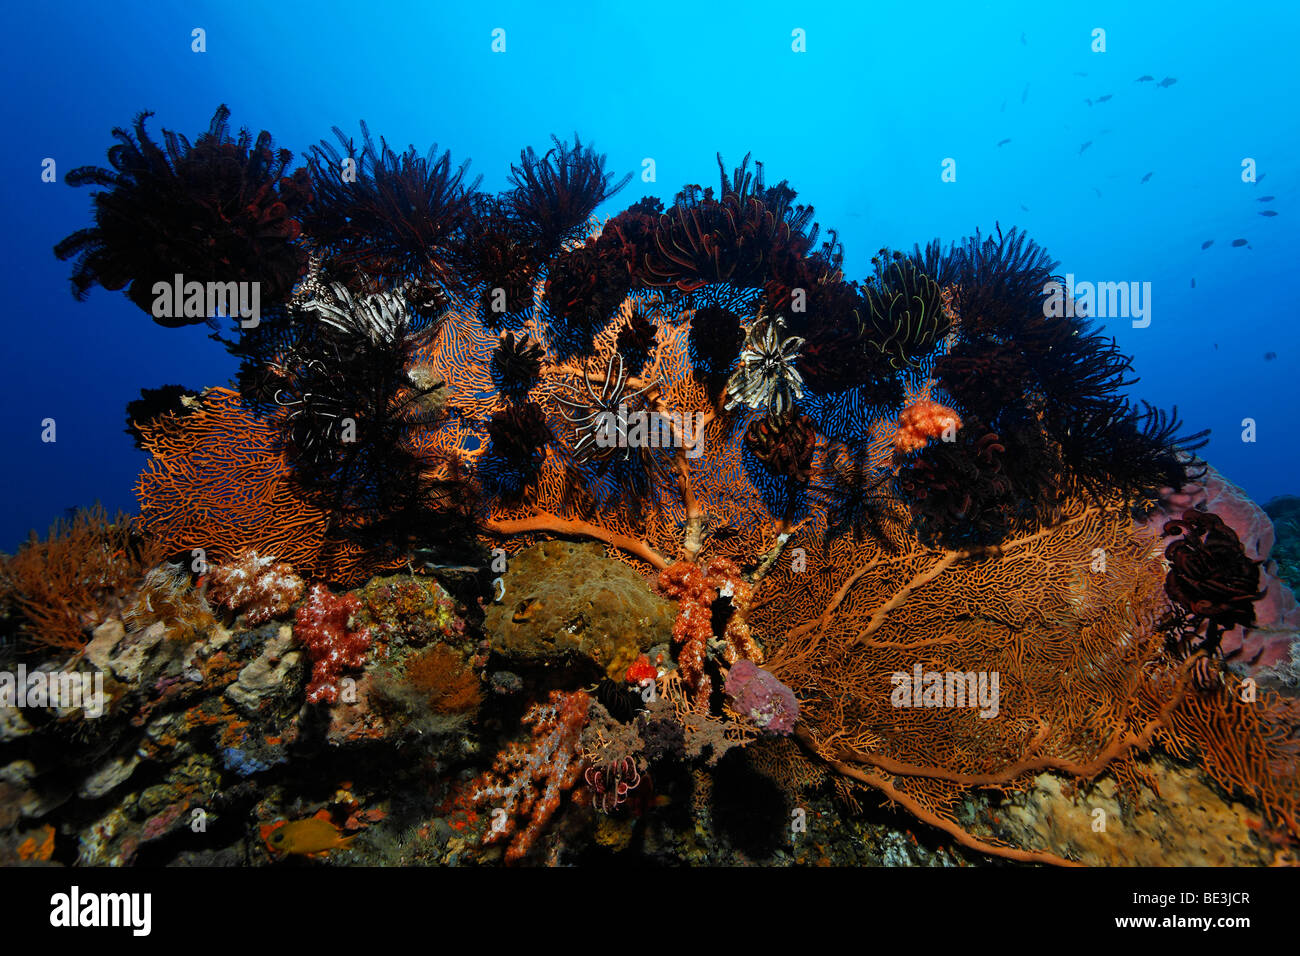 Sea fan (Annella mollis) with numerous Feather stars (Crinoidea), Kuda, Bali, Indonesia, Pacific Ocean Stock Photo